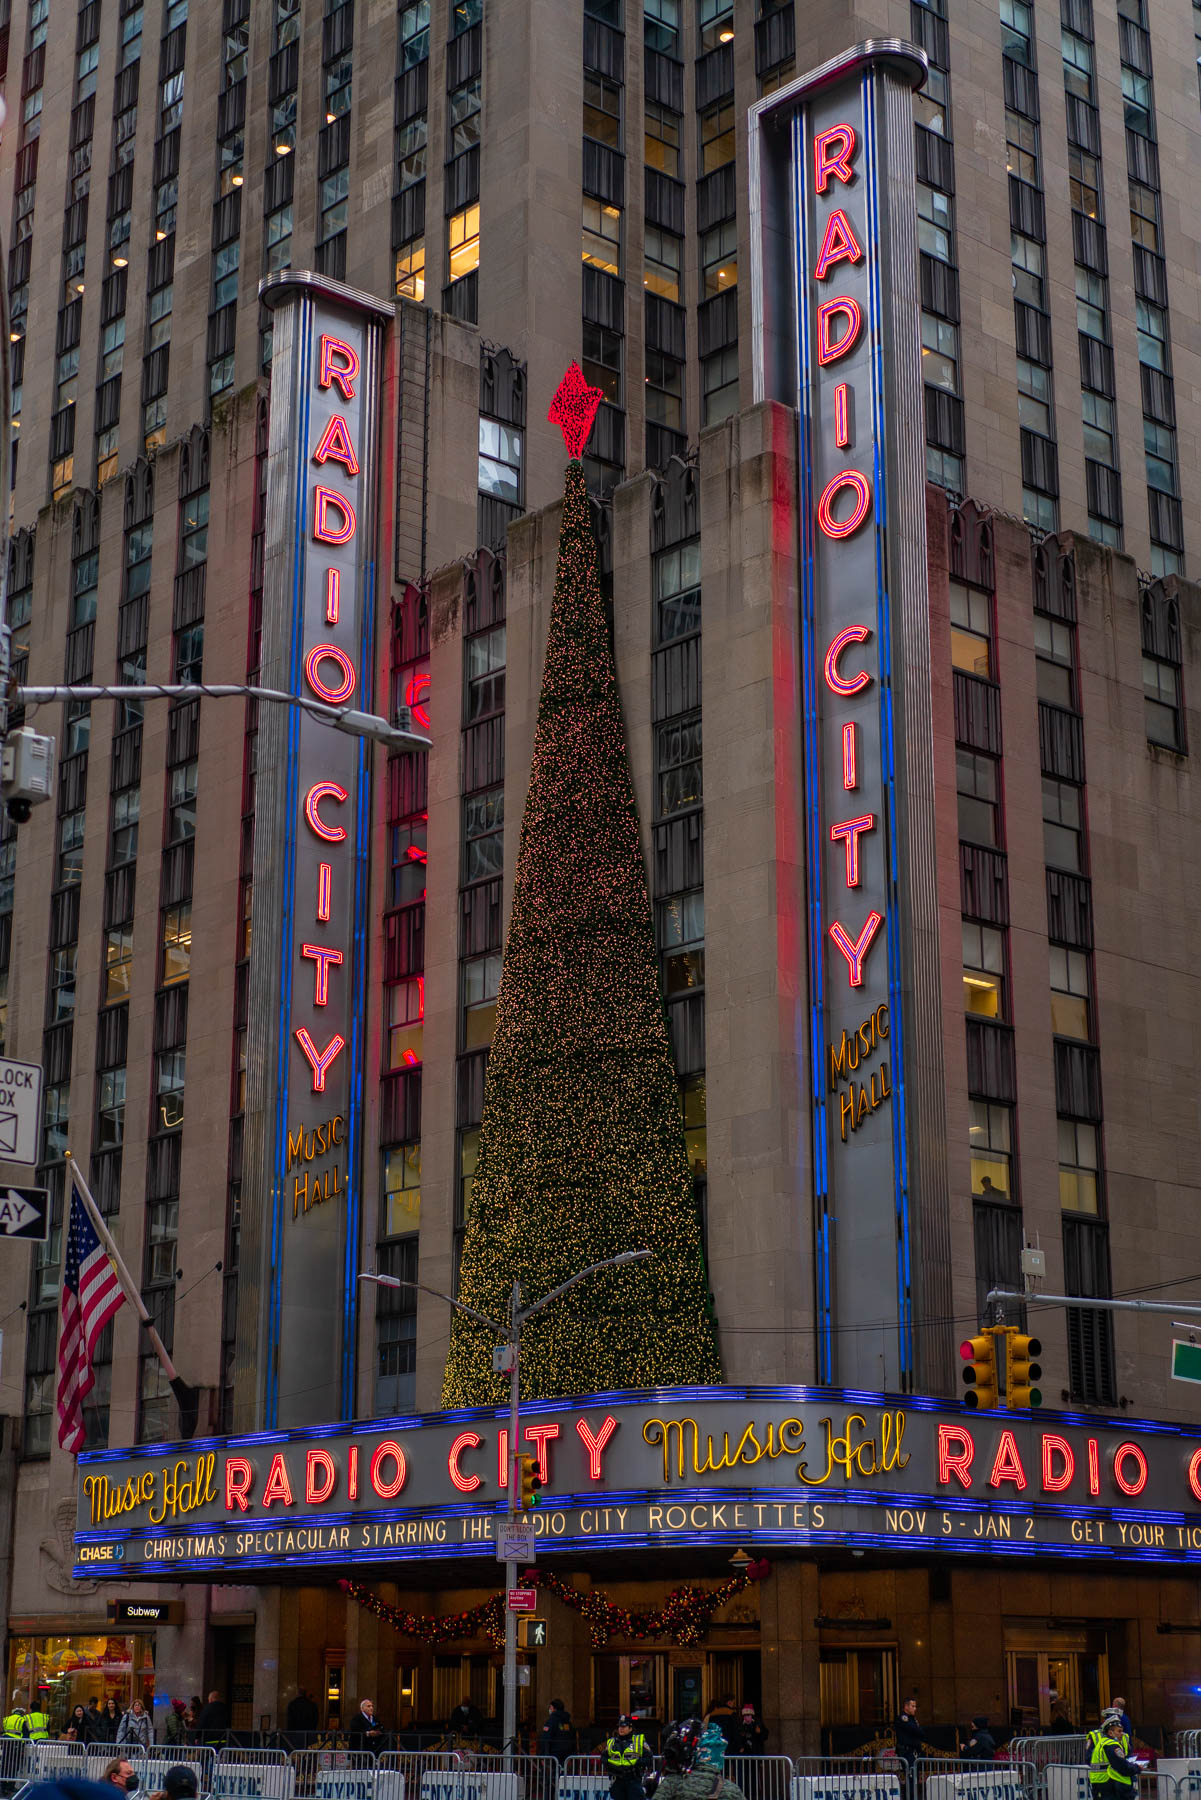 radio city music hall, new york city landmarks